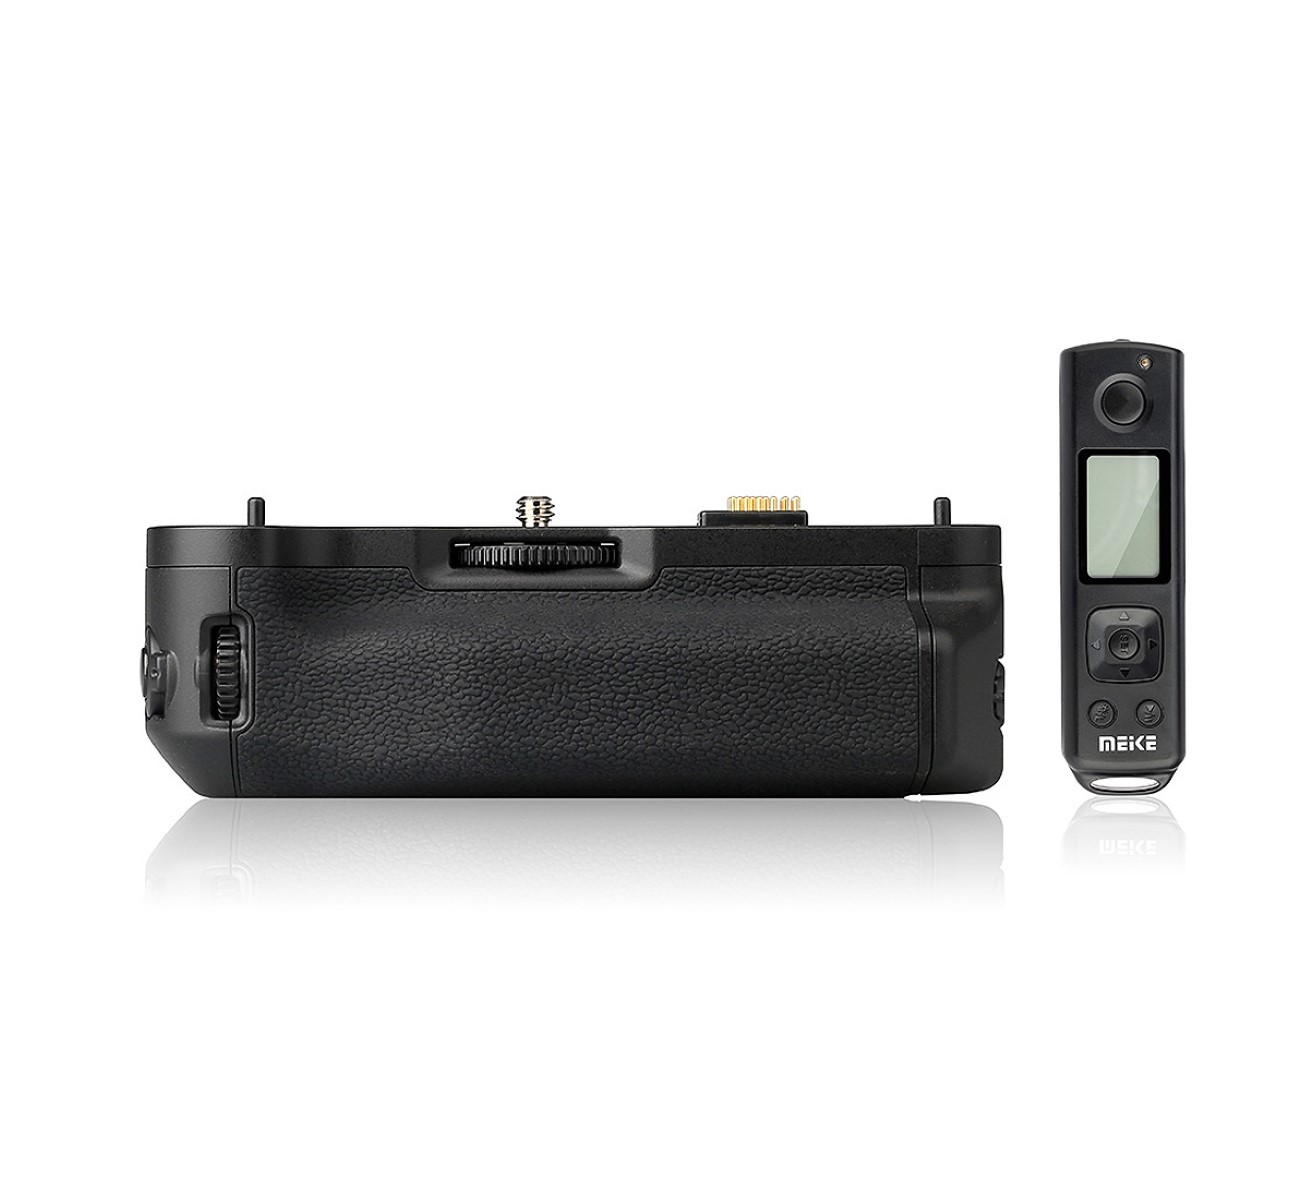 MEIKE Batteriegriff Fujifilm X-T1 Funk-Timer-Fernauslöser, mit mit Funk-Timer-Fernauslöser ähnlich Batteriegriff VG-XT1, Black